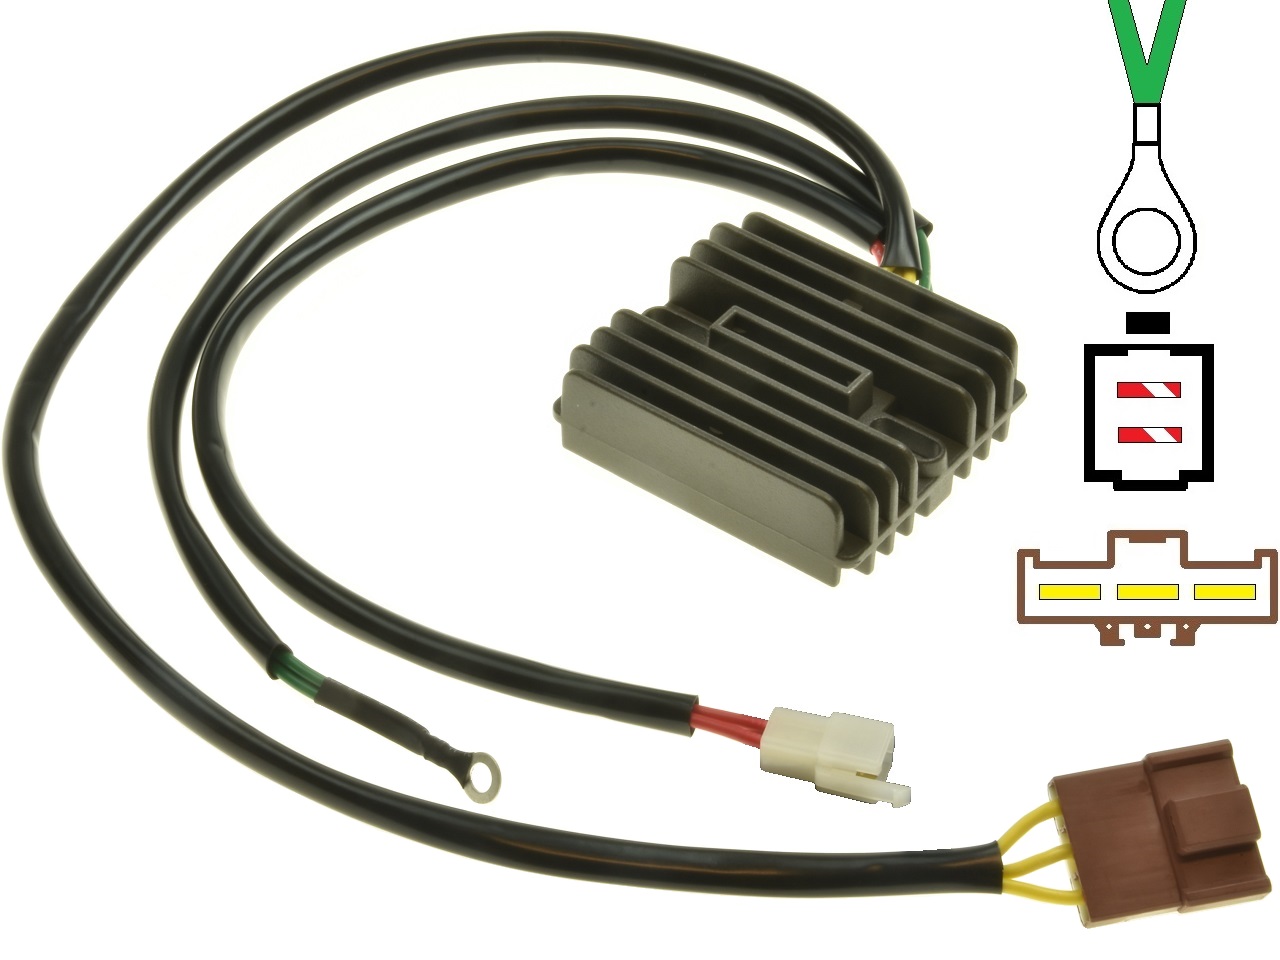 CARR694-KTM 690 950 990 MOSFET Rectificador de regulador de voltaje (62511034100, 62511034000) - Haga click en la imagen para cerrar